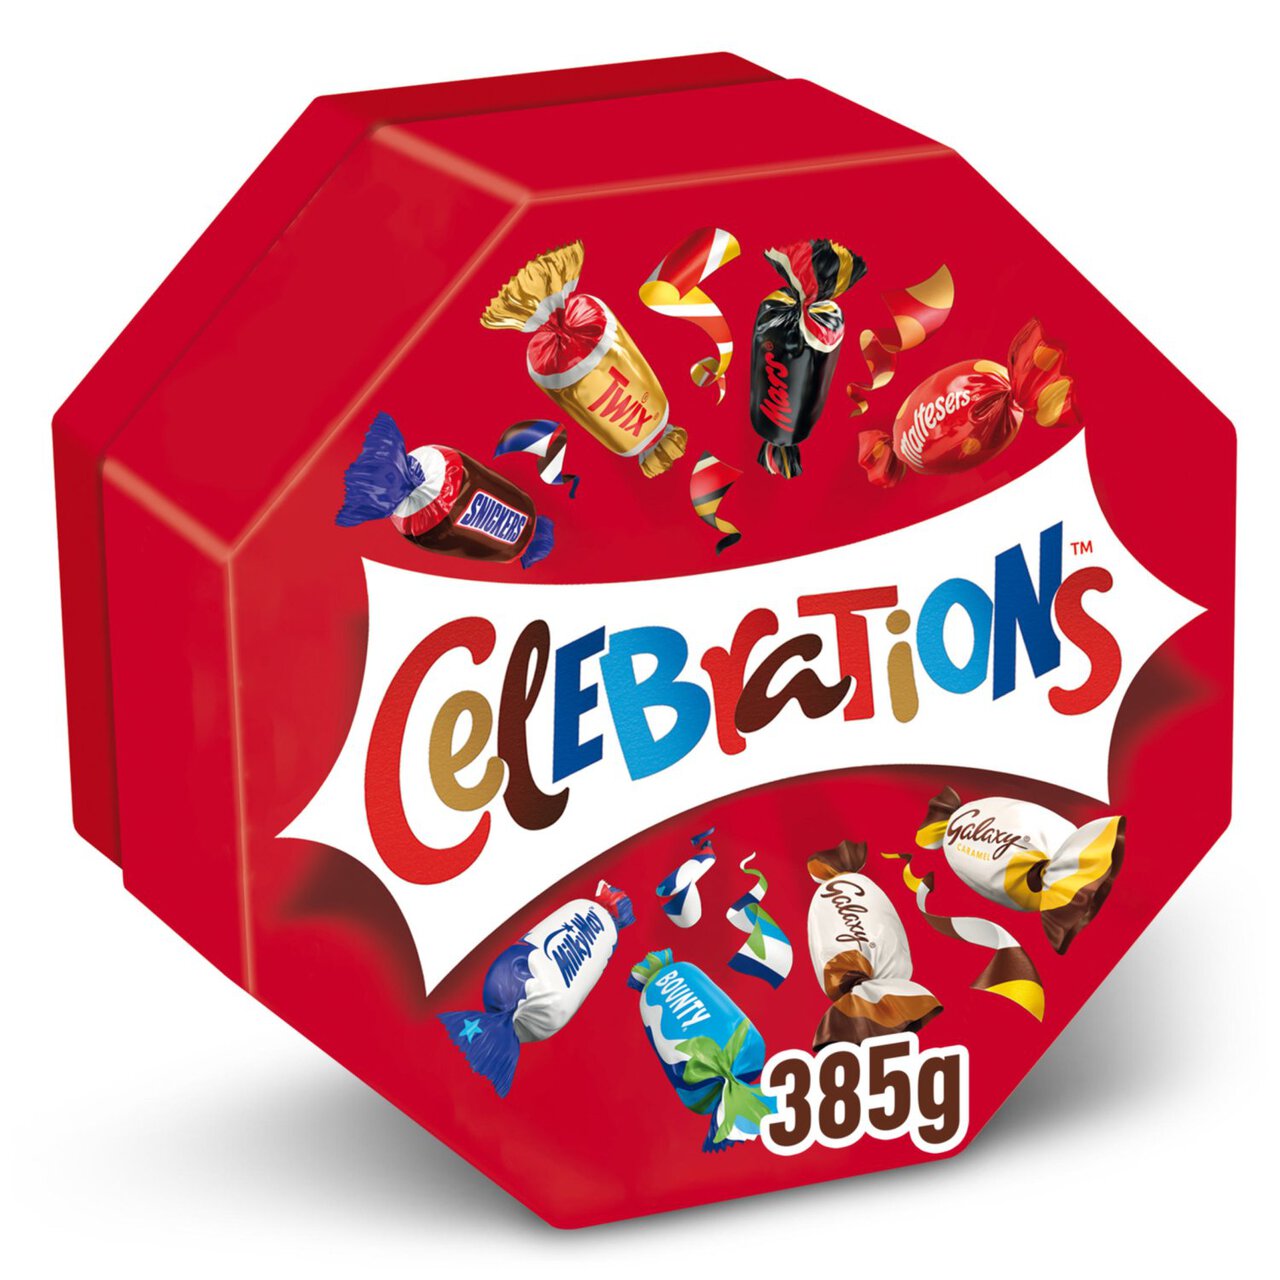 Celebrations Milk Chocolate Centerpiece Box Chocolate & Biscuit Bars 385g 385g